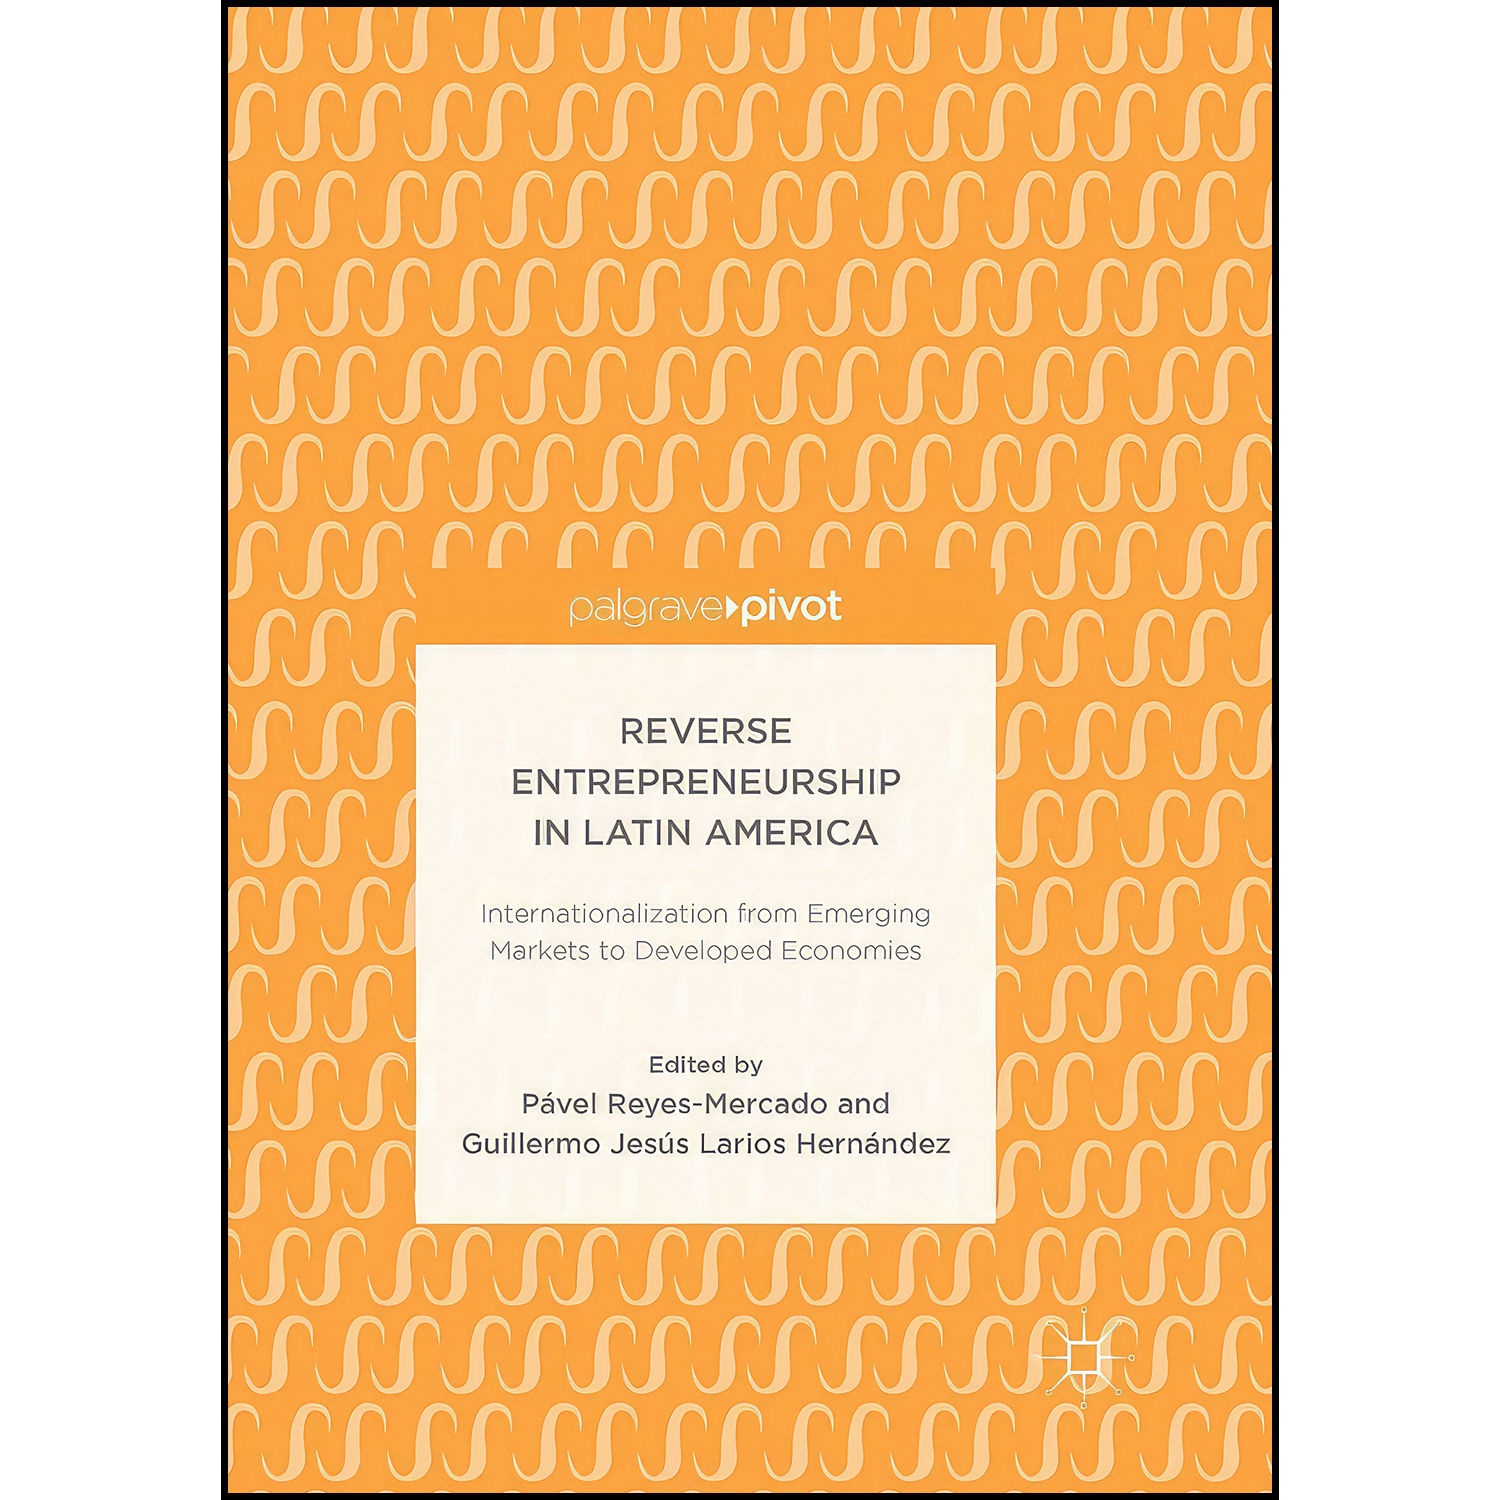 کتاب Reverse Entrepreneurship in Latin America اثر جمعي از نويسندگان انتشارات بله